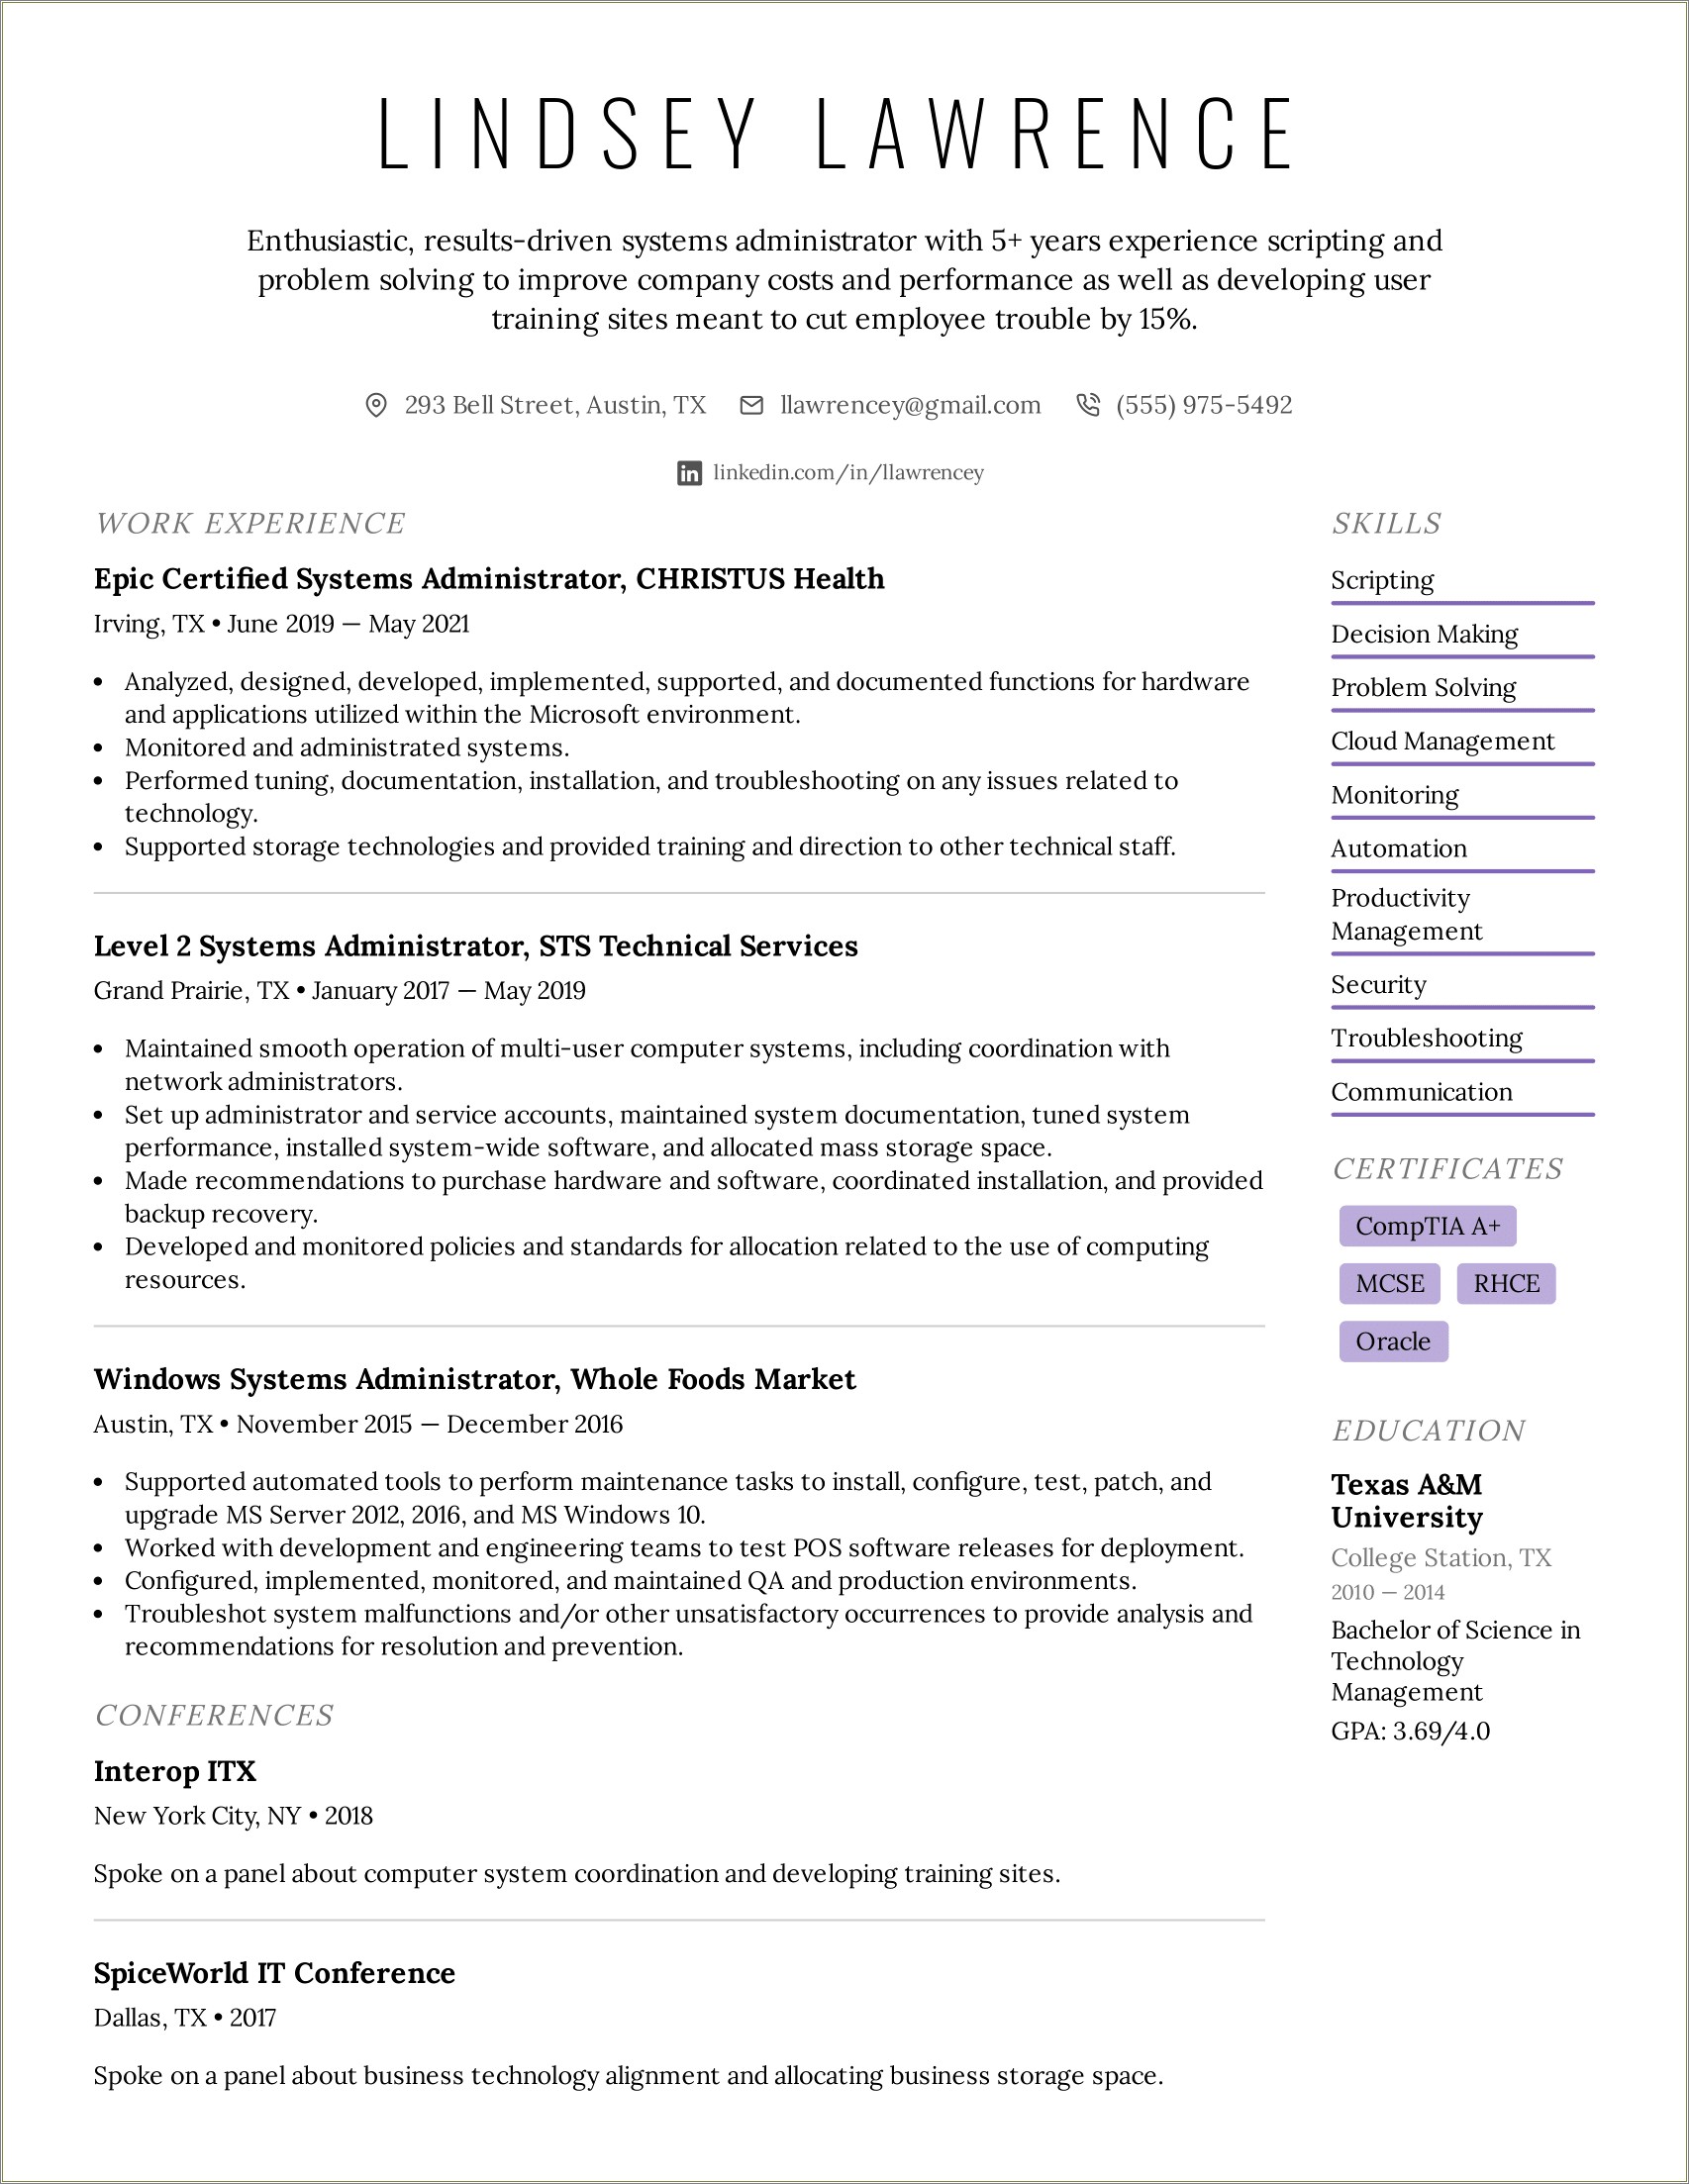 Key Skills For System Administrator Resume